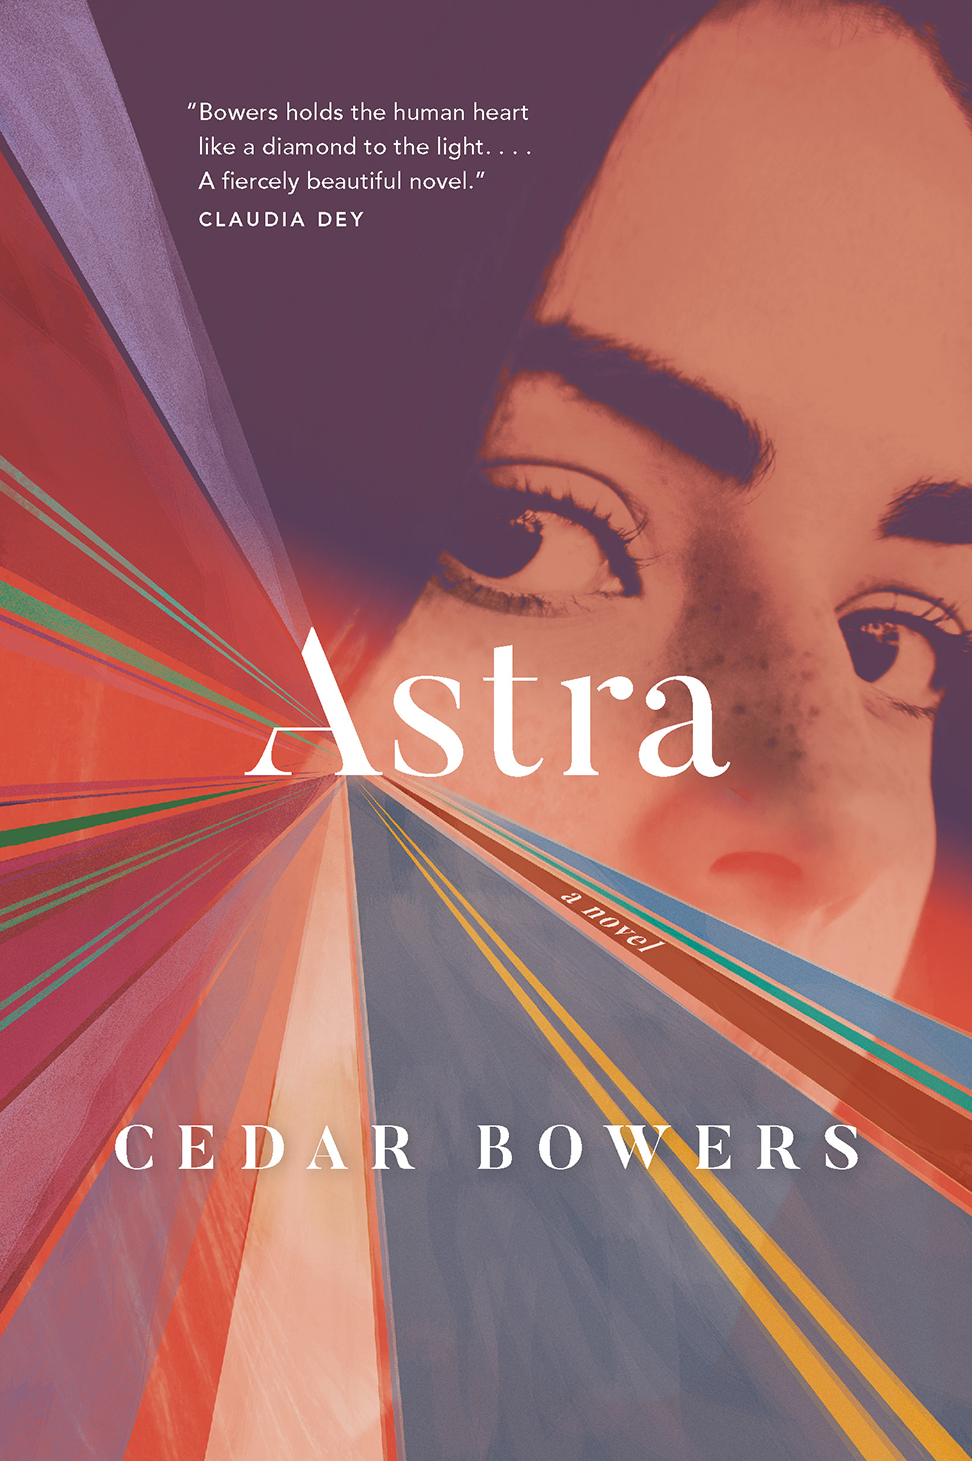 Astra by Cedar Bowers